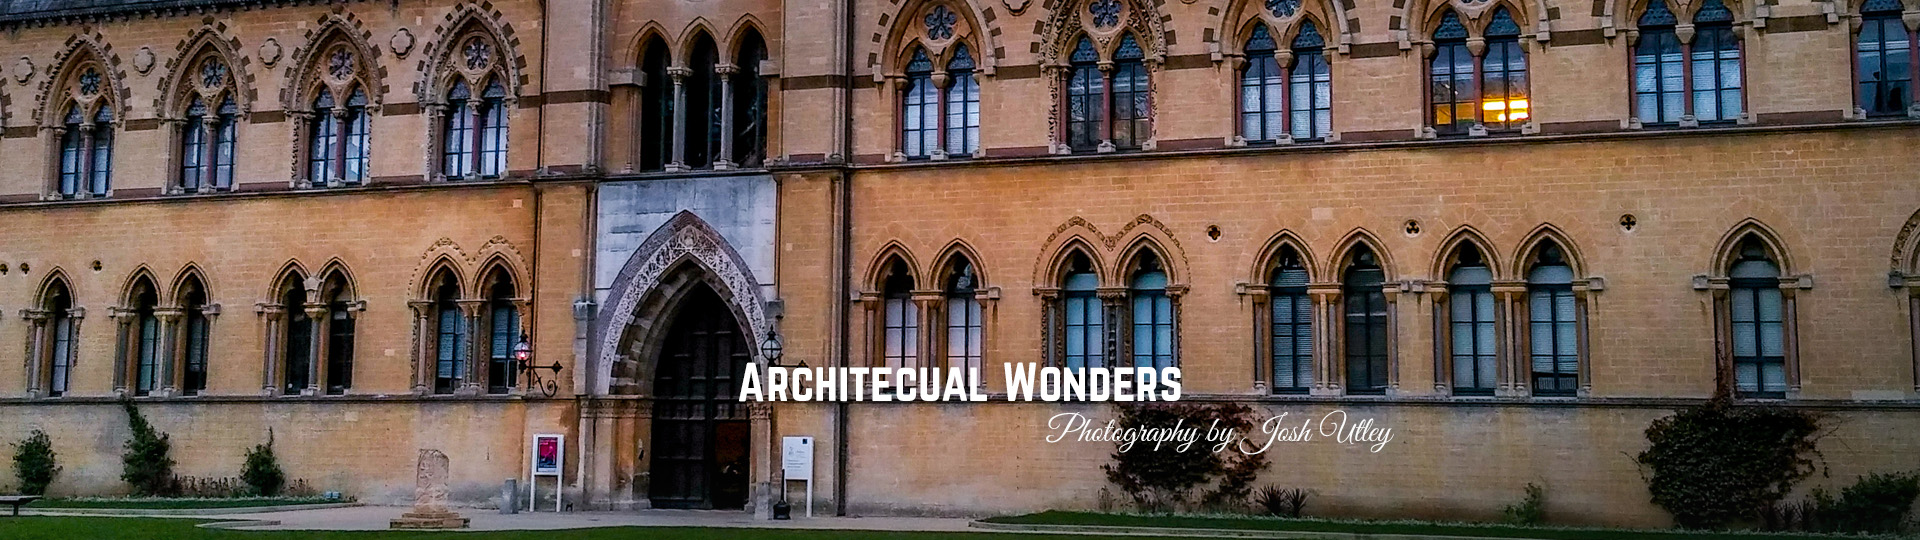 Architecual Wonders Photography by Josh Utley